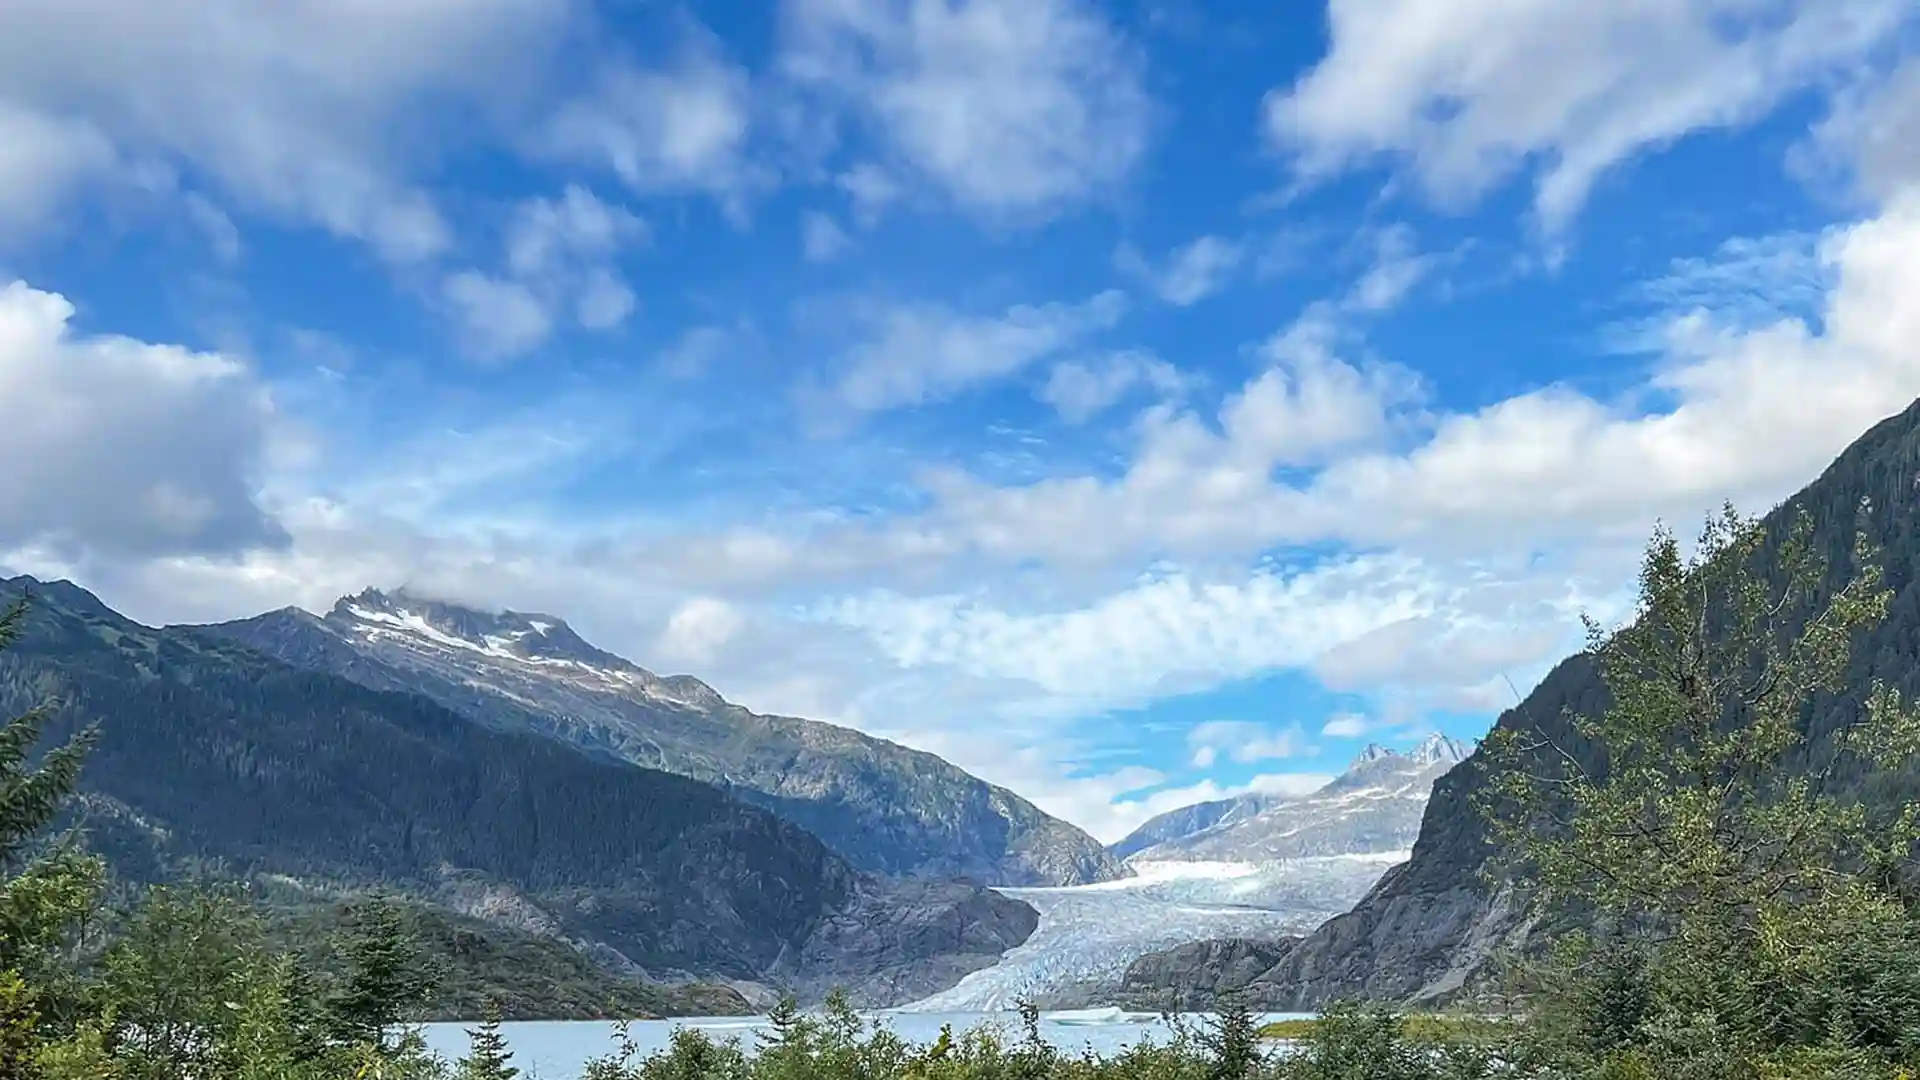 View of Mendenhall Glacier in Alaska from Visitor Center.